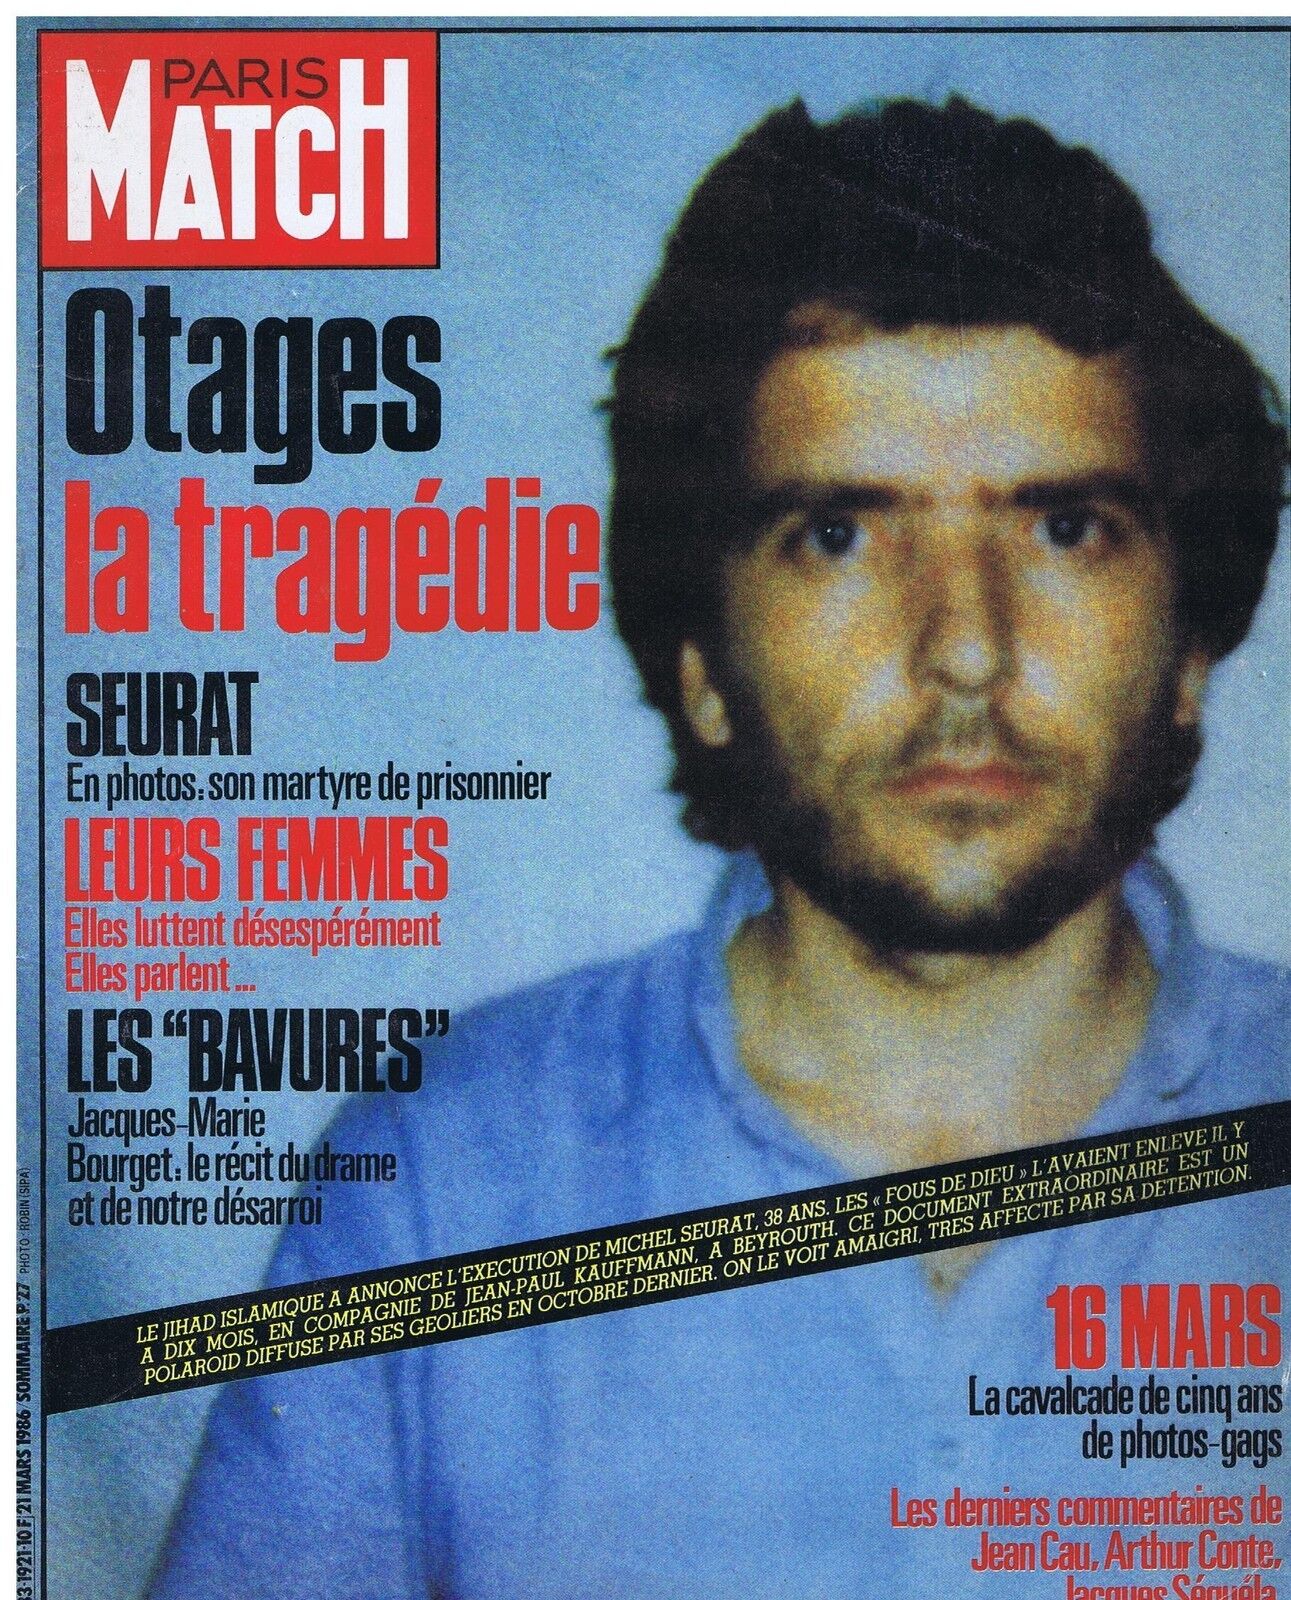 PARIS MATCH 1921 21/03/96 MAGAZINE COVER PATRICK SEURAT the Hostage